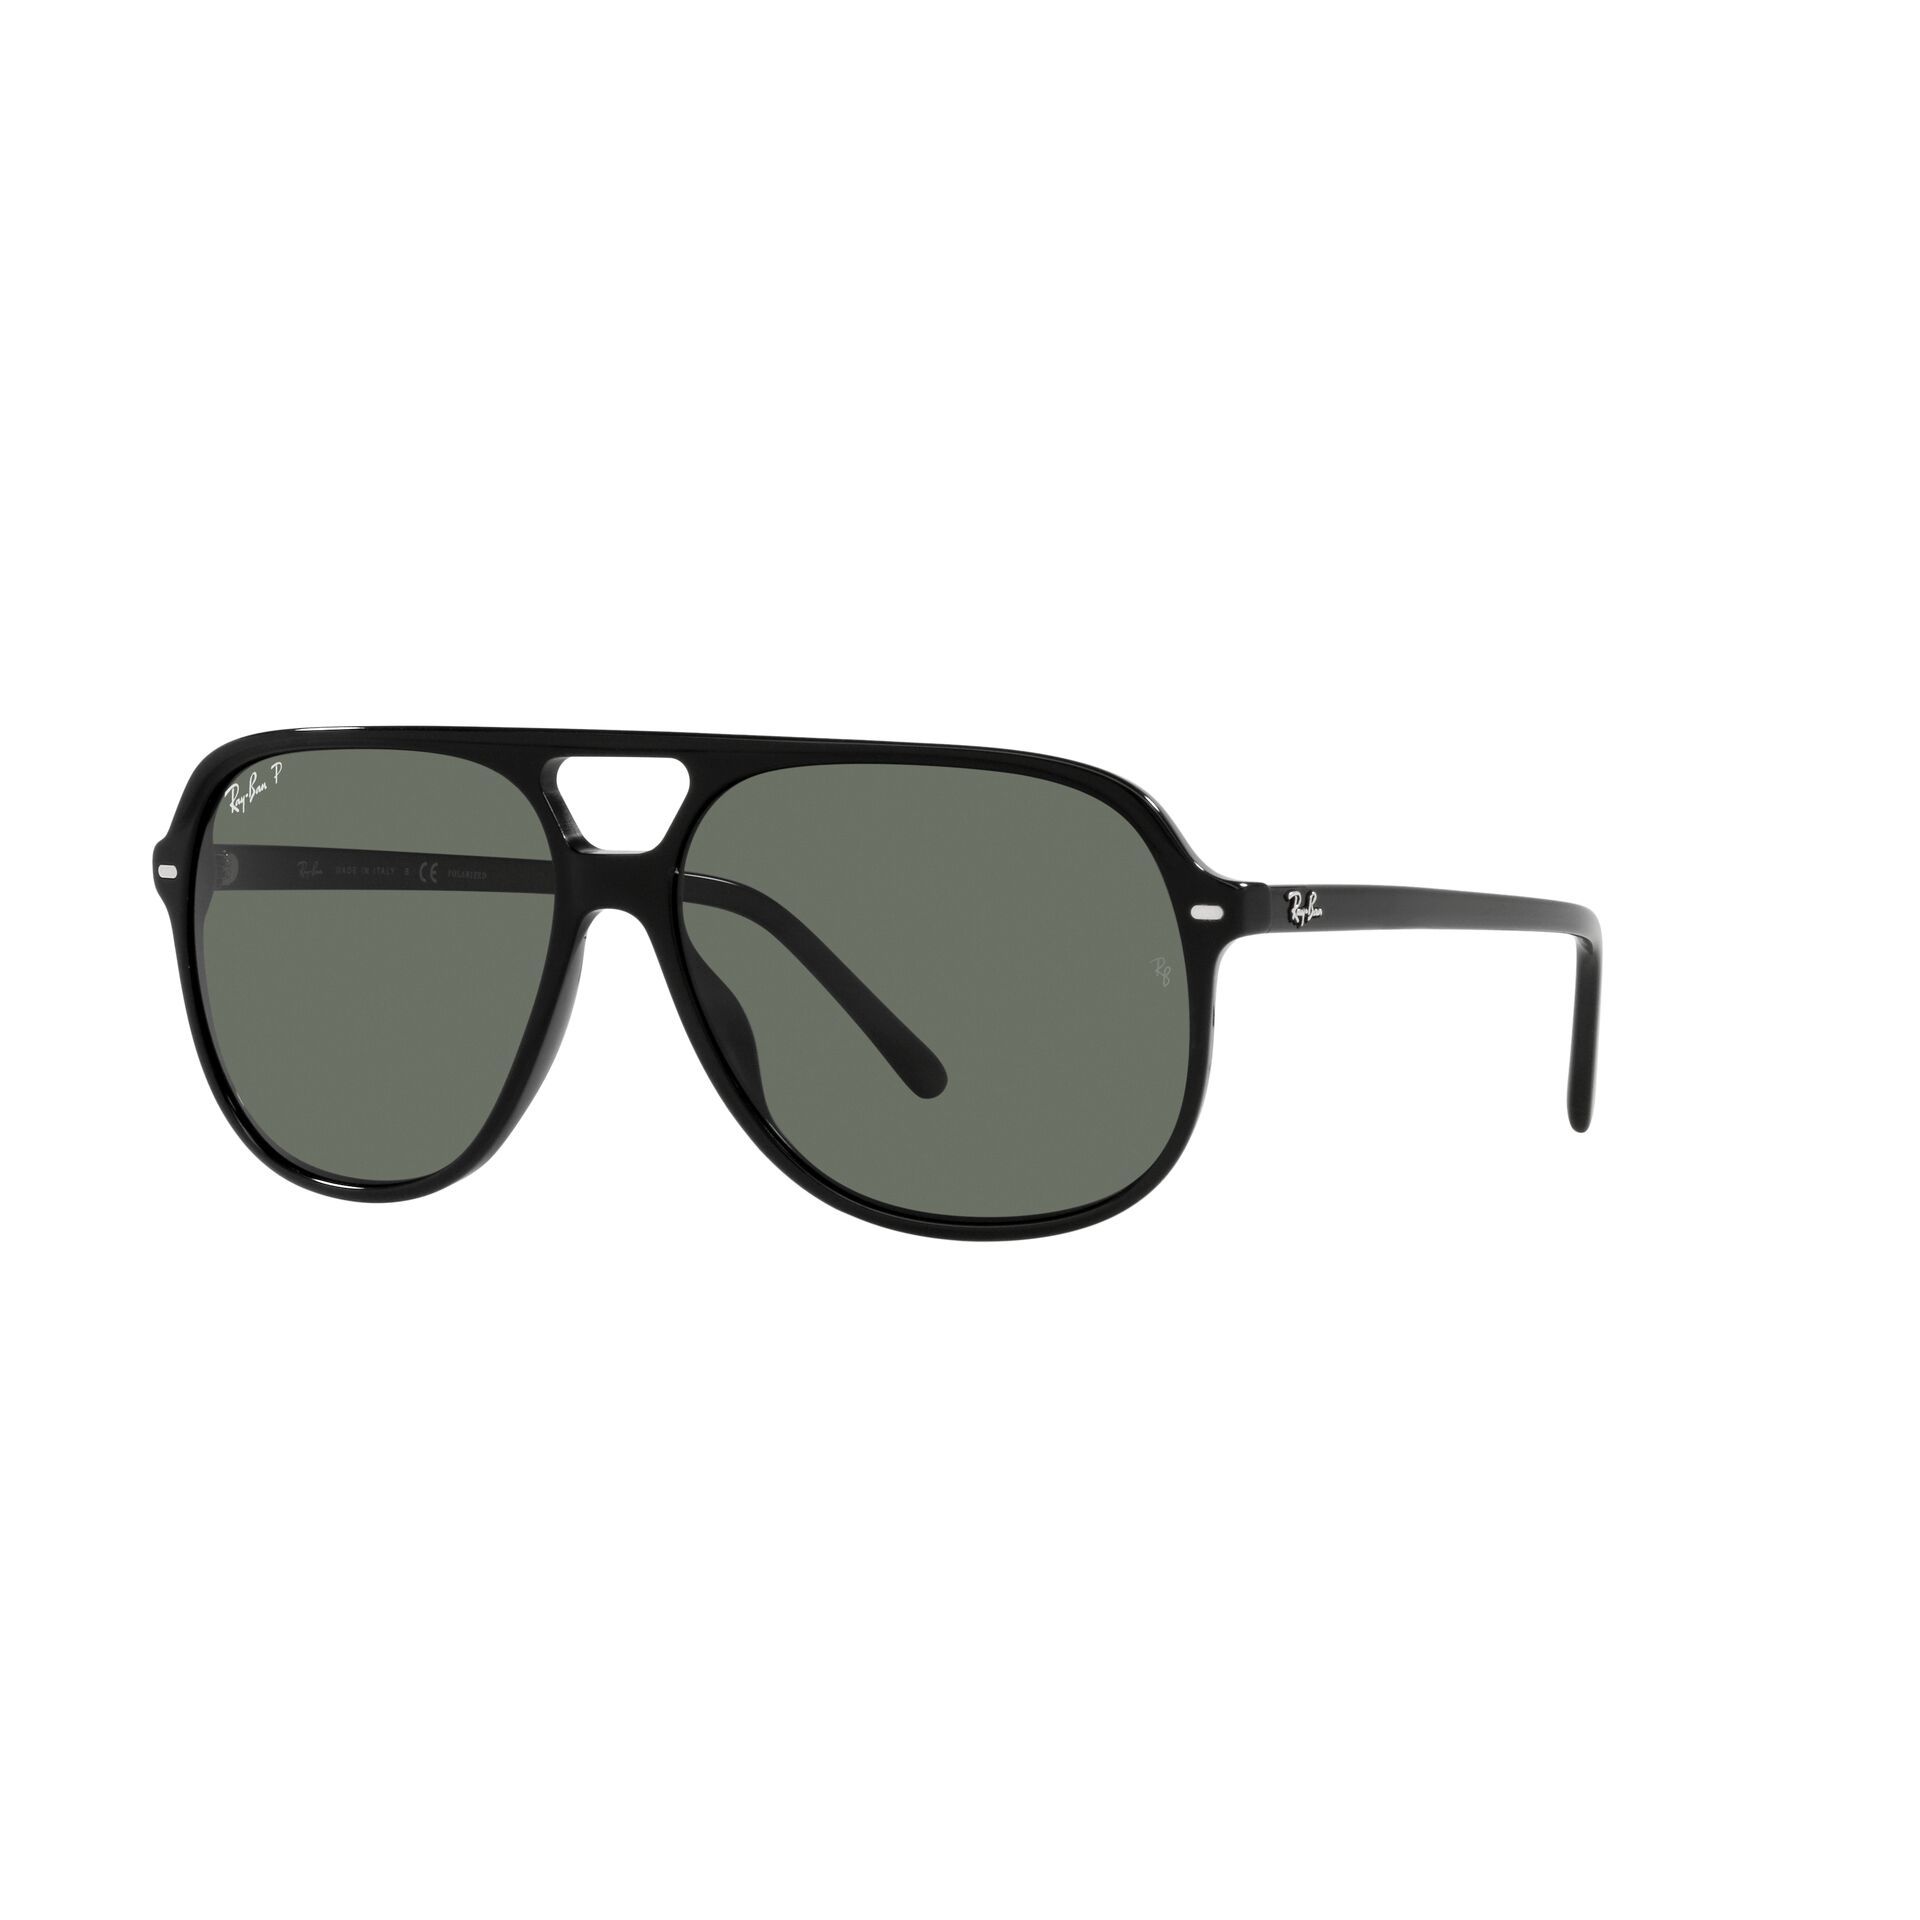 RB2198 Square Sunglasses 901 58 - size 56